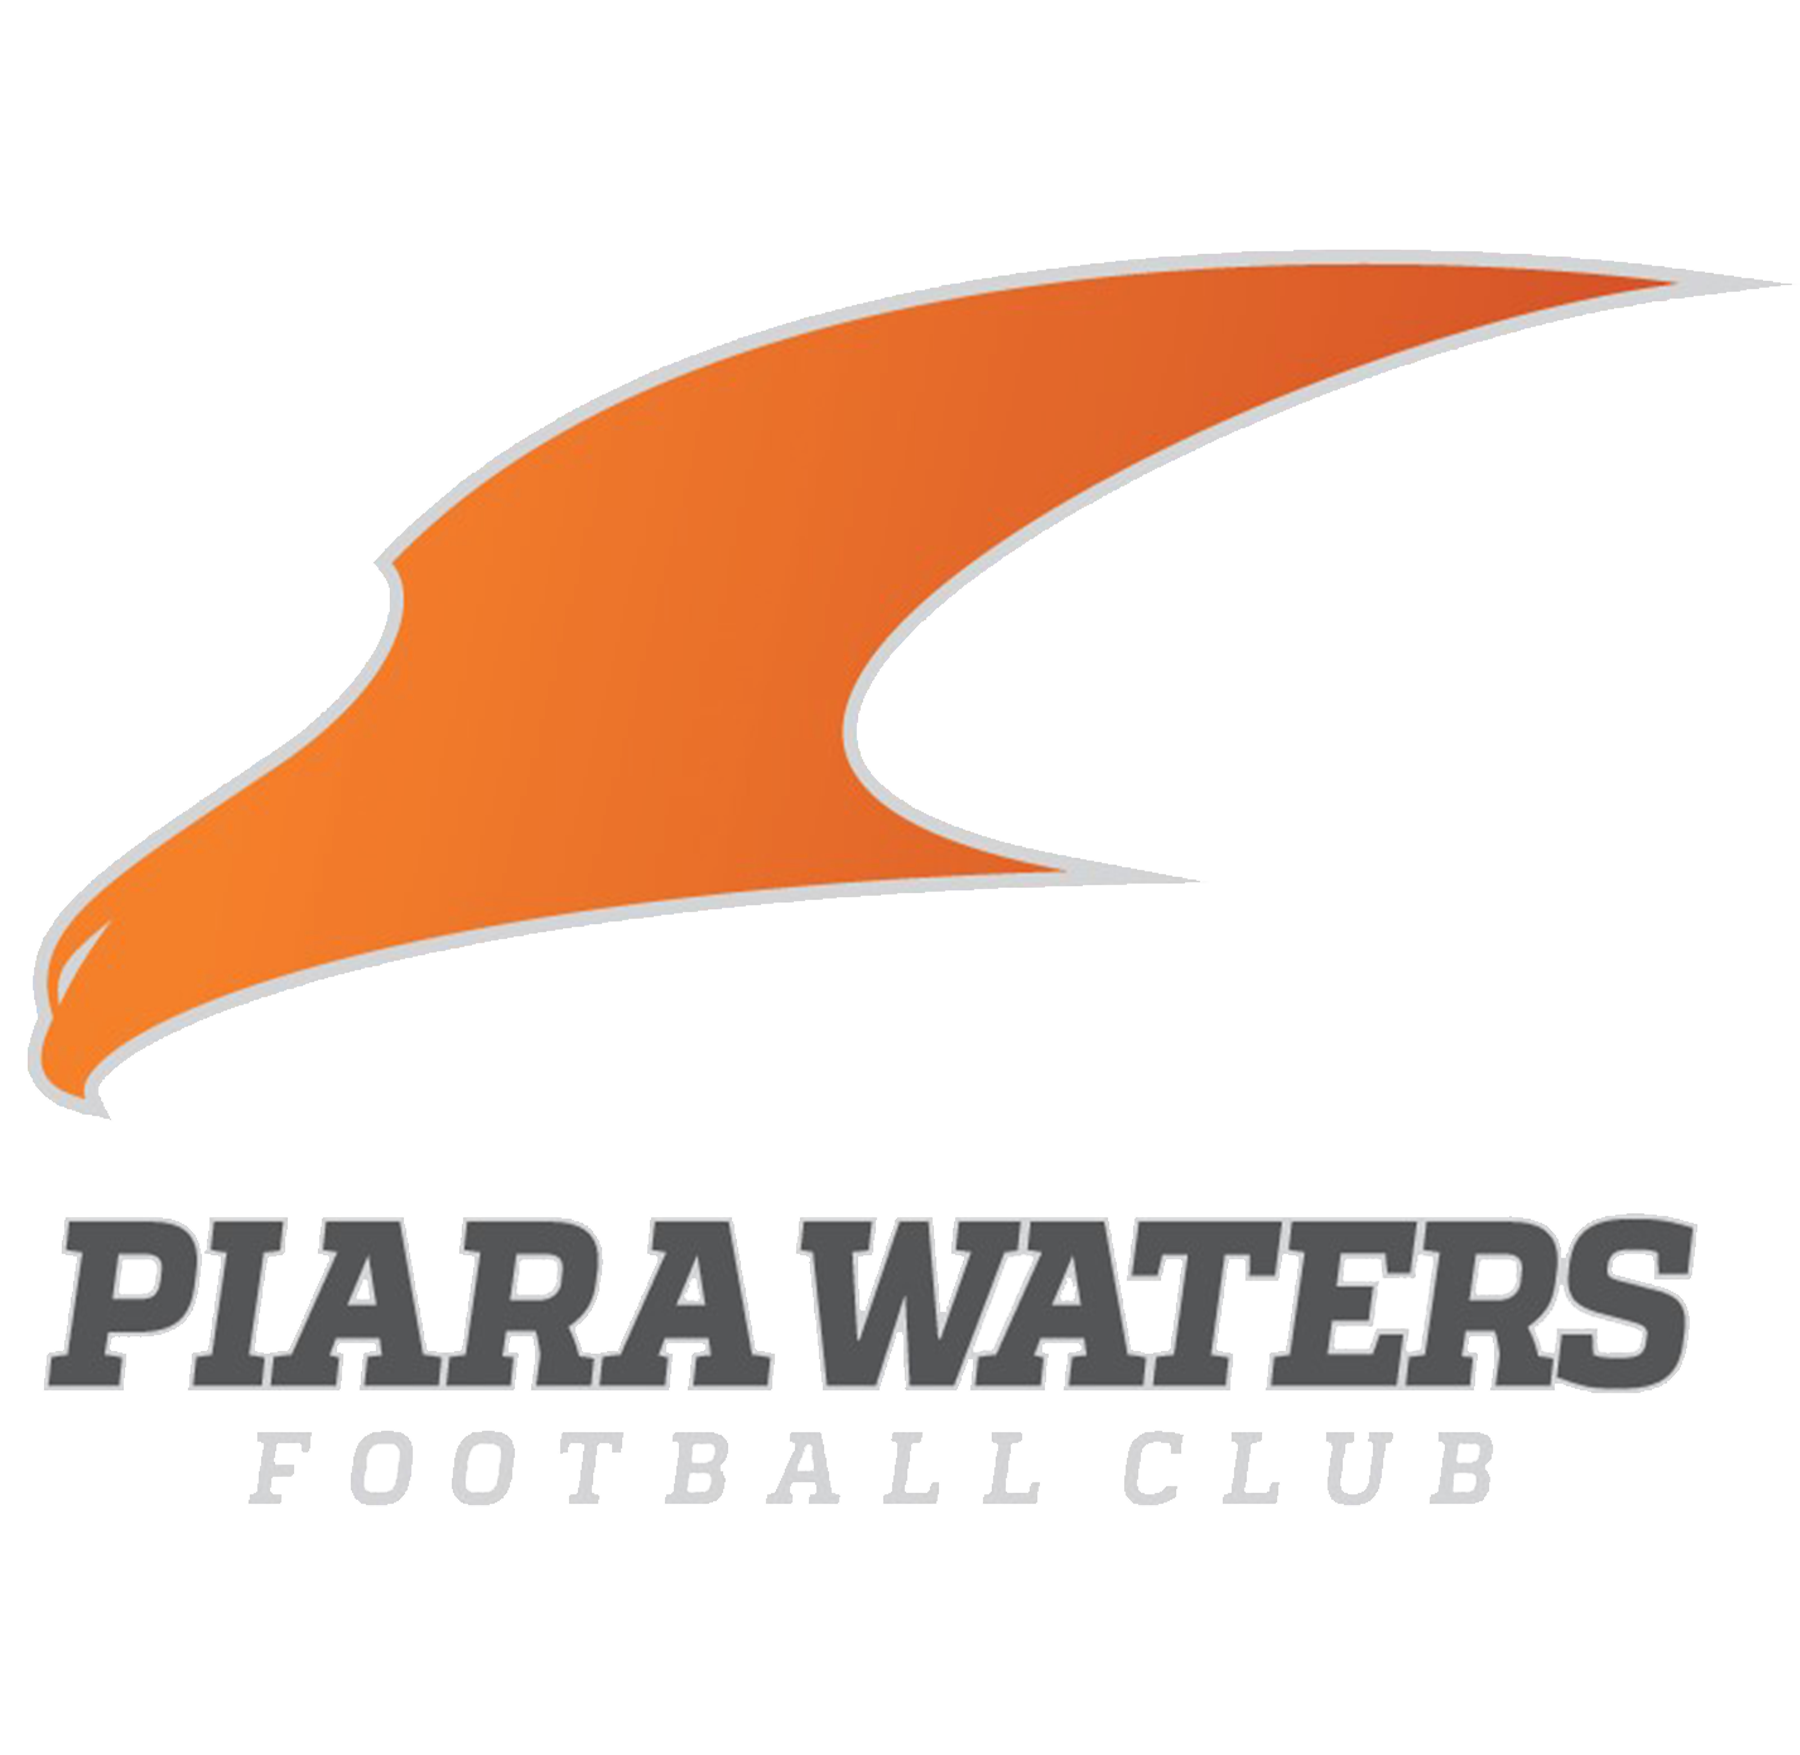 Piara Waters Football Club